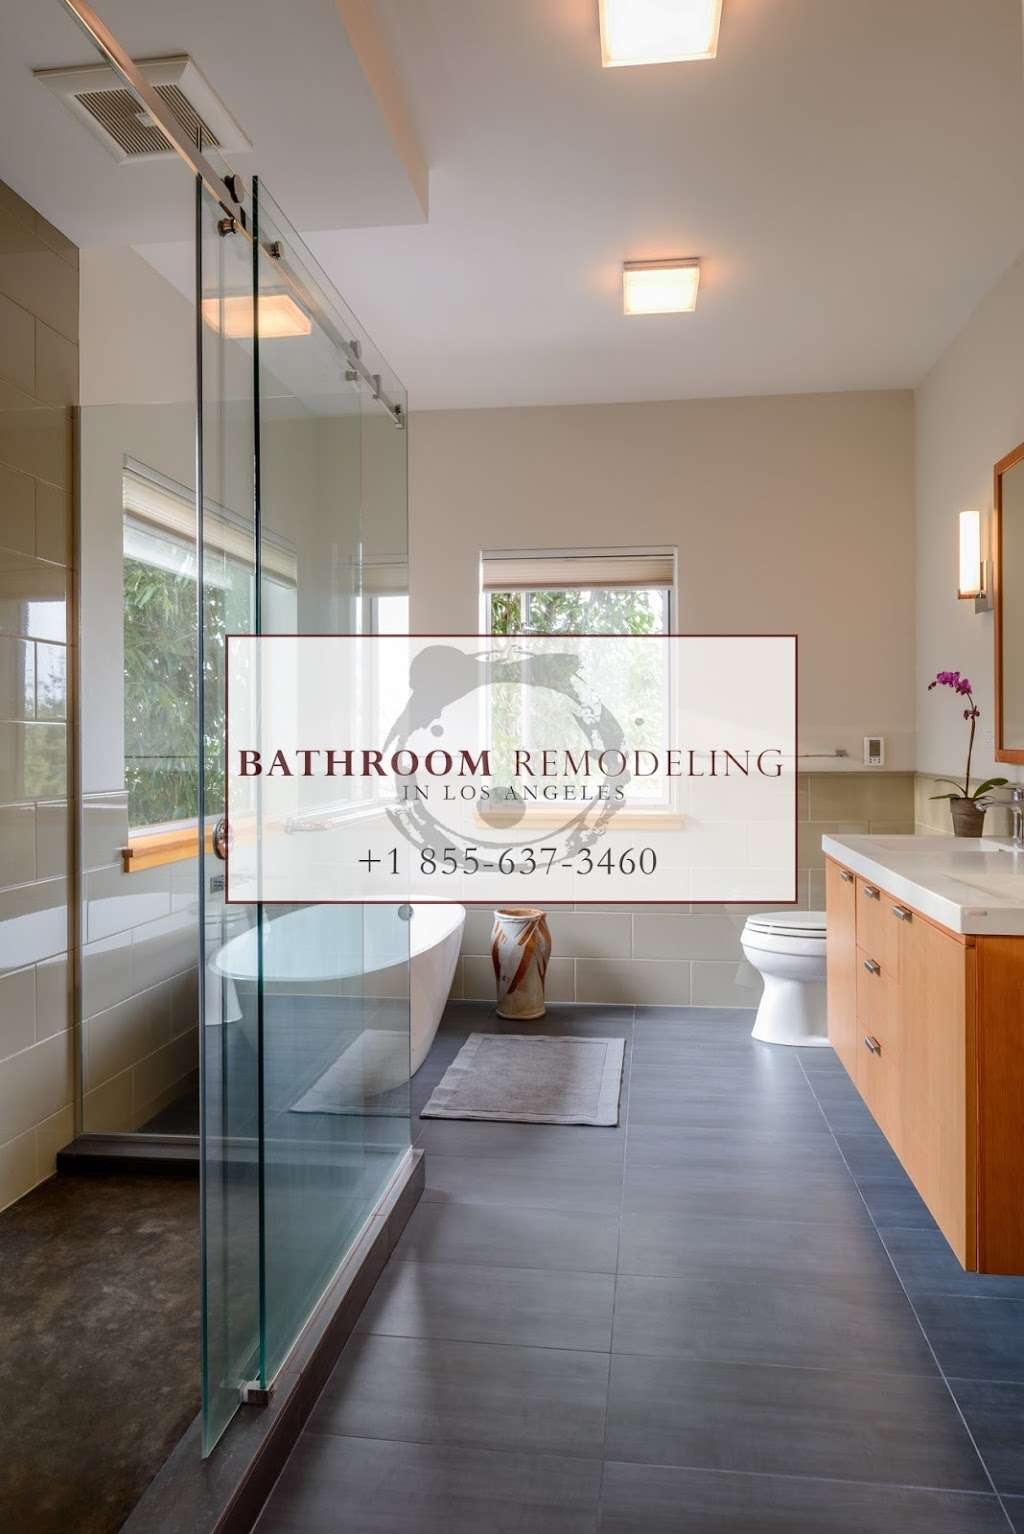 Bathroom Remodeling in Los angeles, CA | 902 N Mayo Ave, Compton, CA 90221, USA | Phone: (855) 637-3460